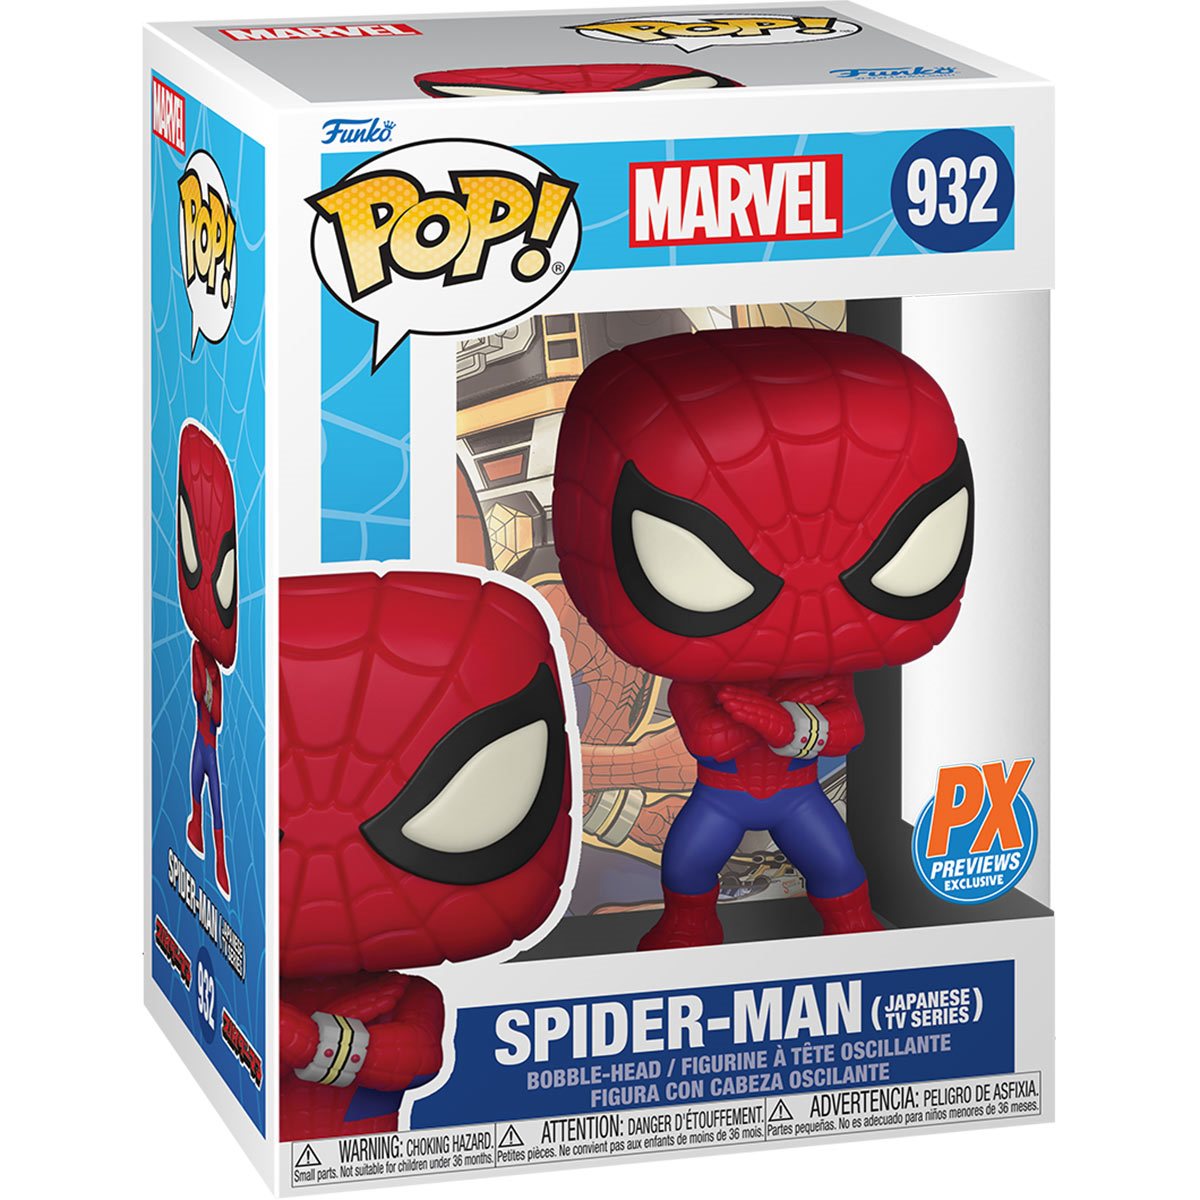 Marvel Spider-Man Japanese TV Series Funko Pop! Vinyl Figure 932 - Previews Exclusive